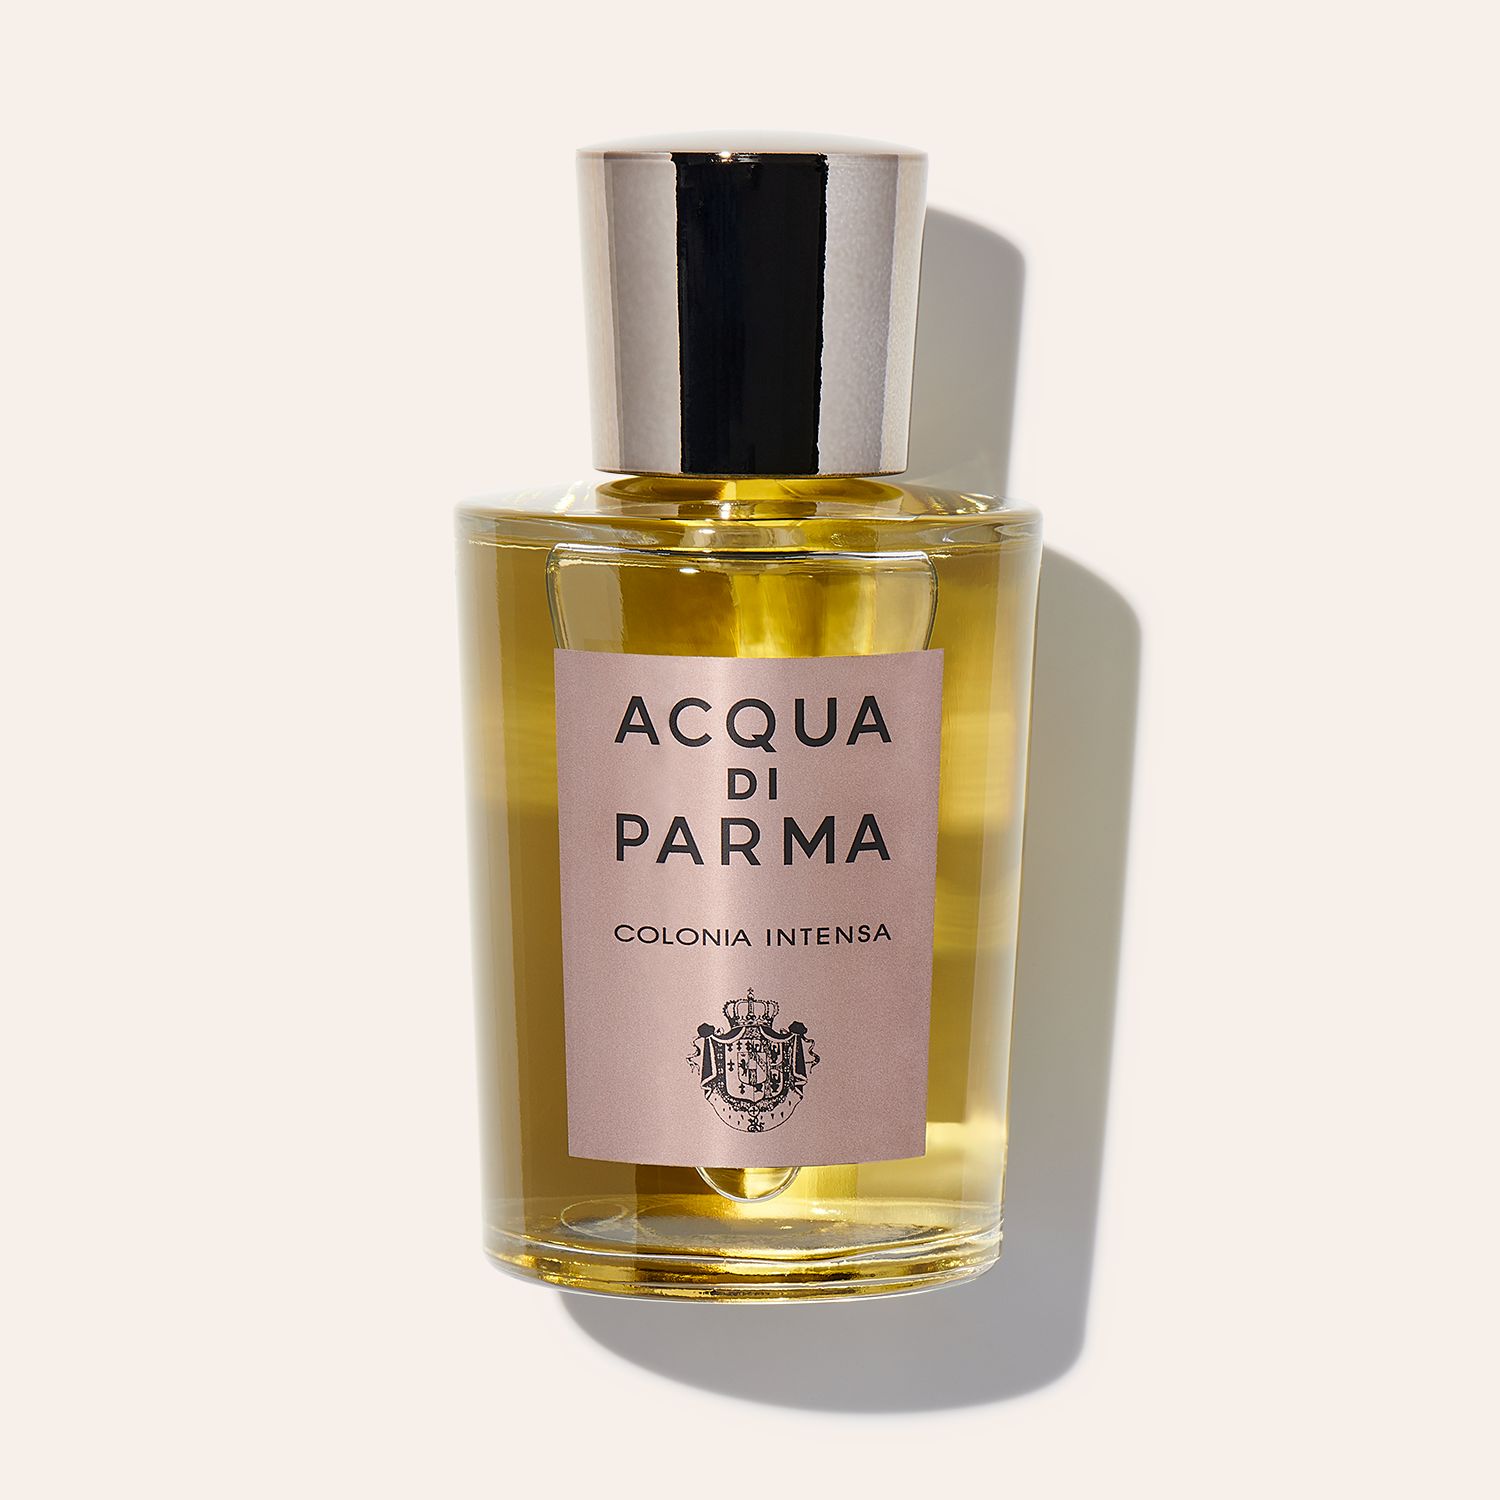 Peonia Nobile Eau de Parfum Spray for Women by Acqua di Parma – Fragrance  Market